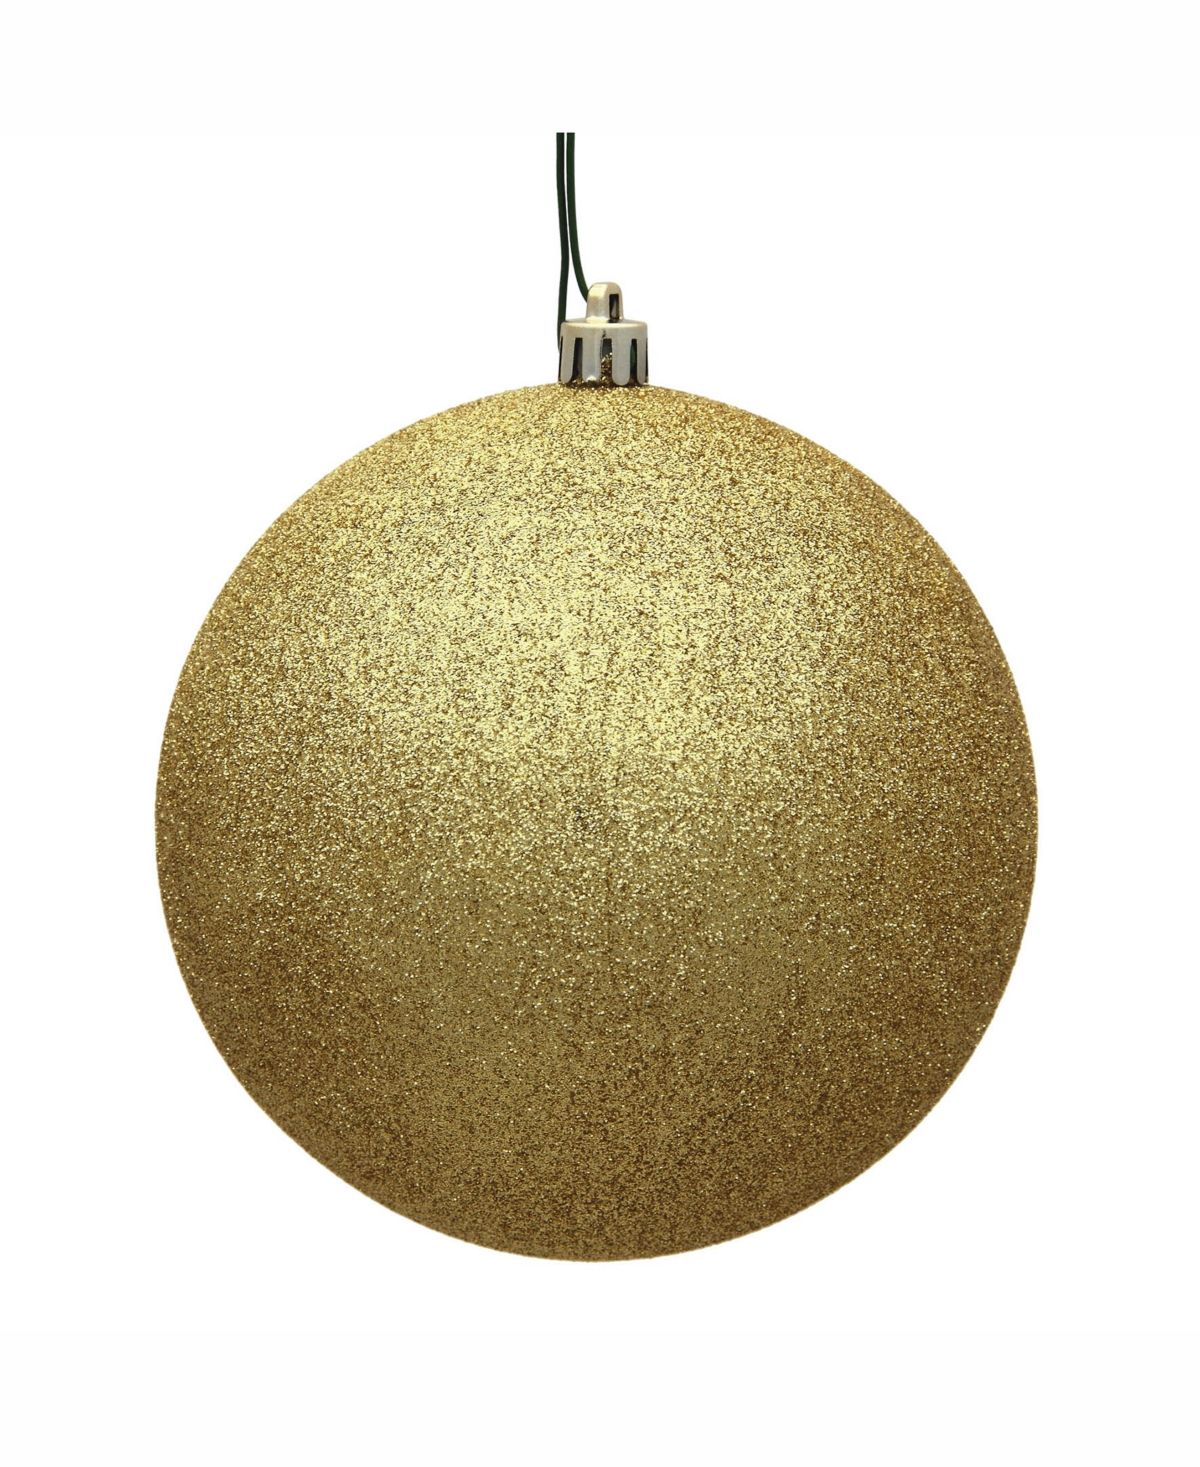 Vickerman 10" Gold Glitter Ball Christmas Ornament | Macys (US)